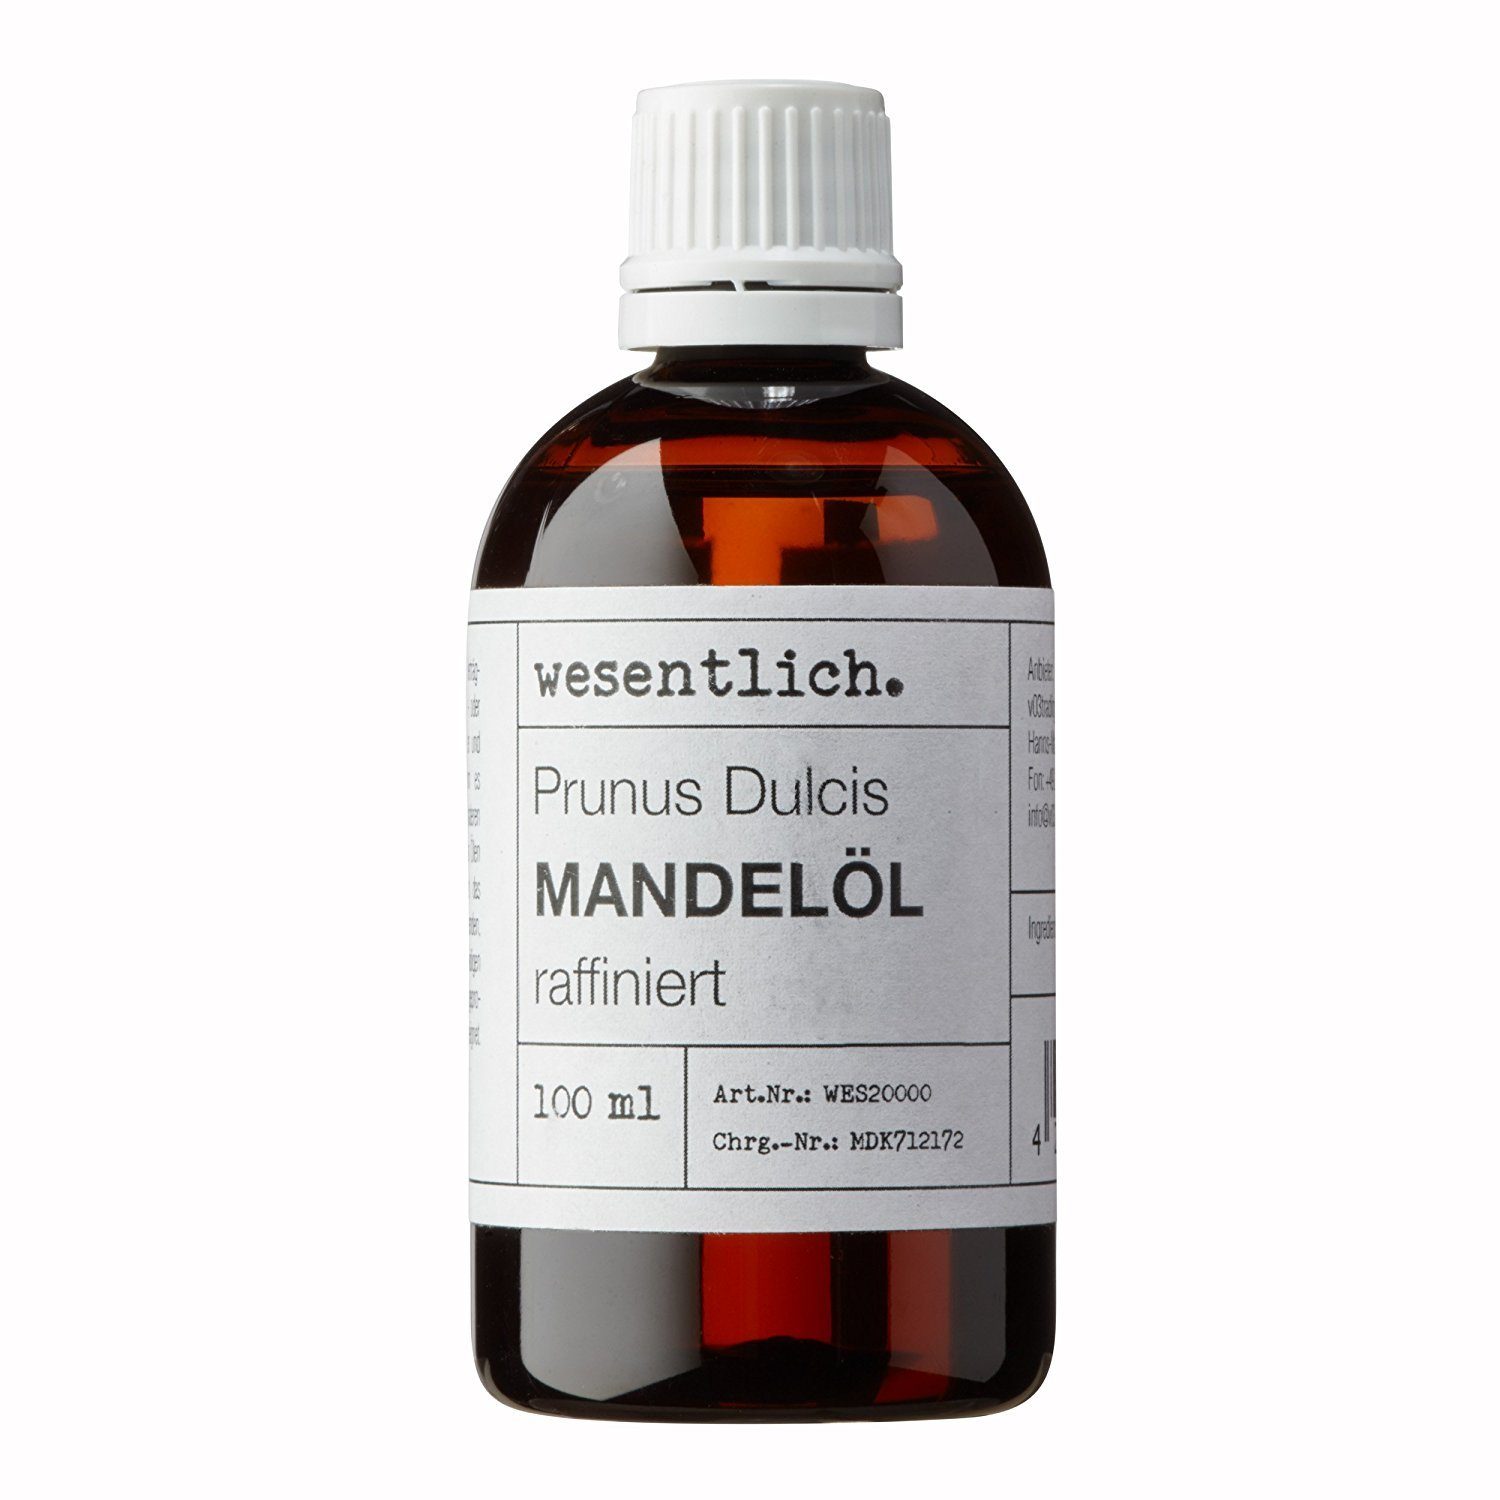 Mandelöl (100ml) Körperöl wesentlich. raffiniert